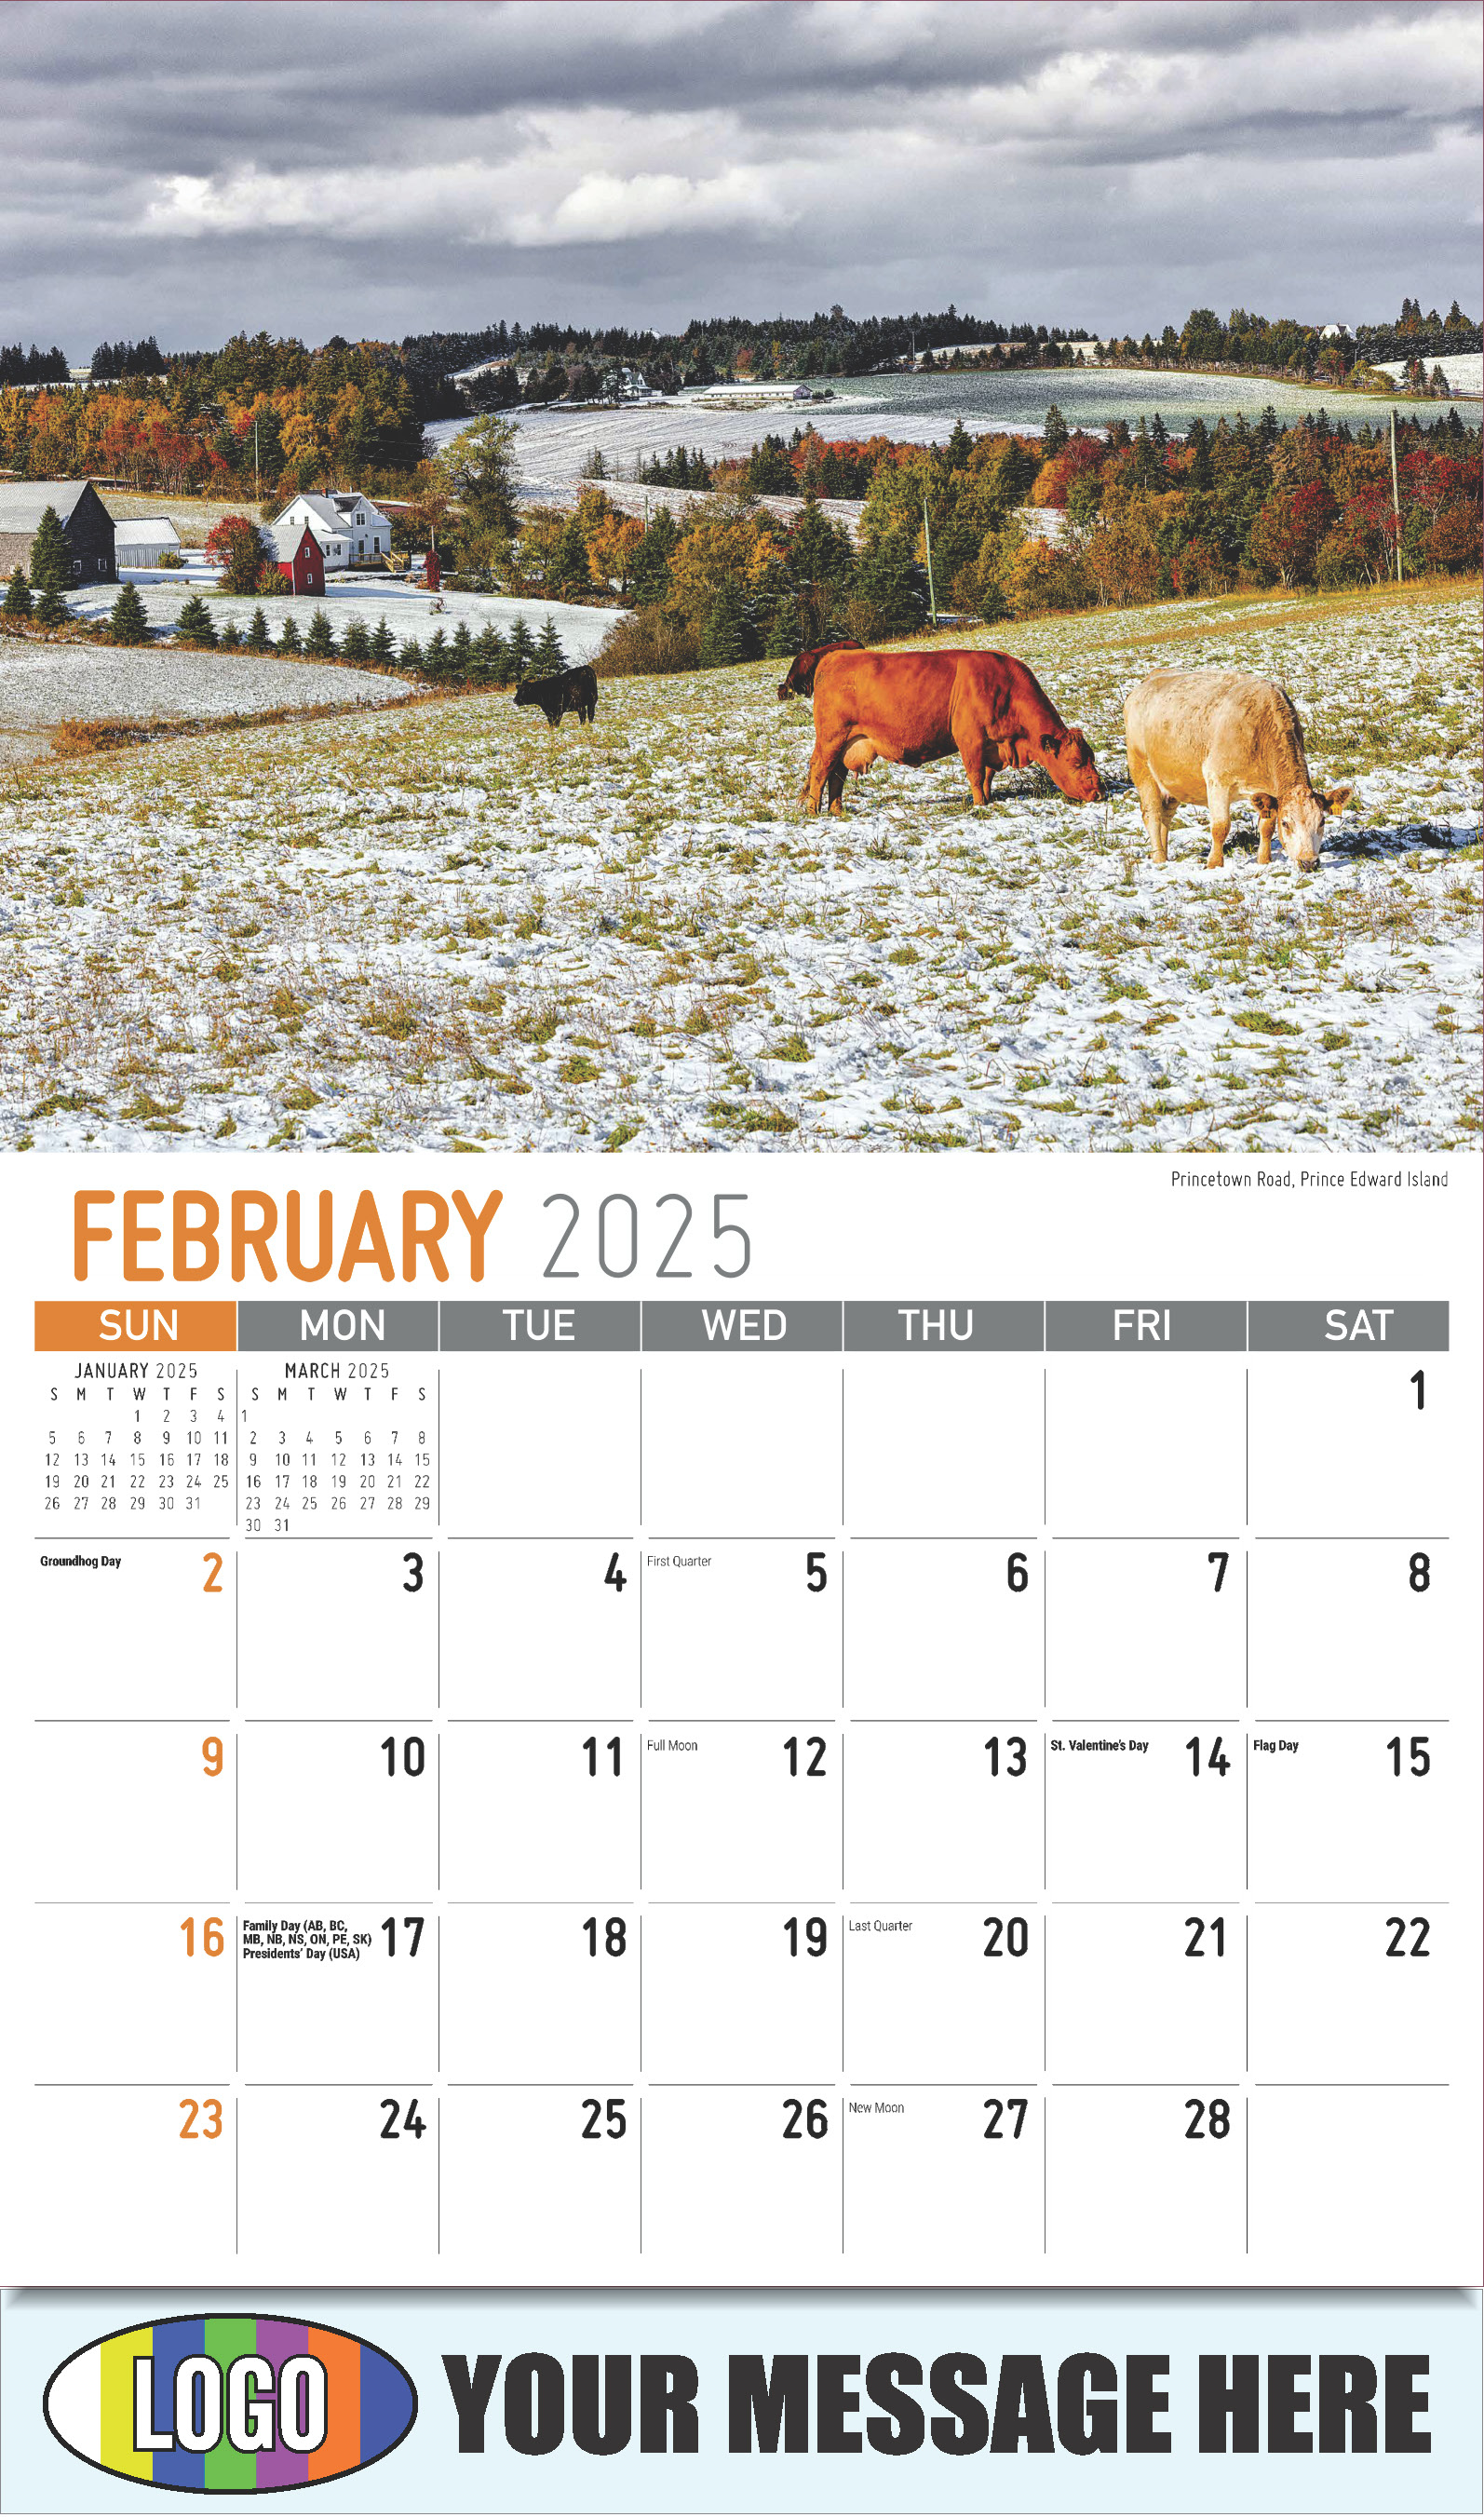 Atlantic Canada Scenic 2025 Business Promotion Calendar - February